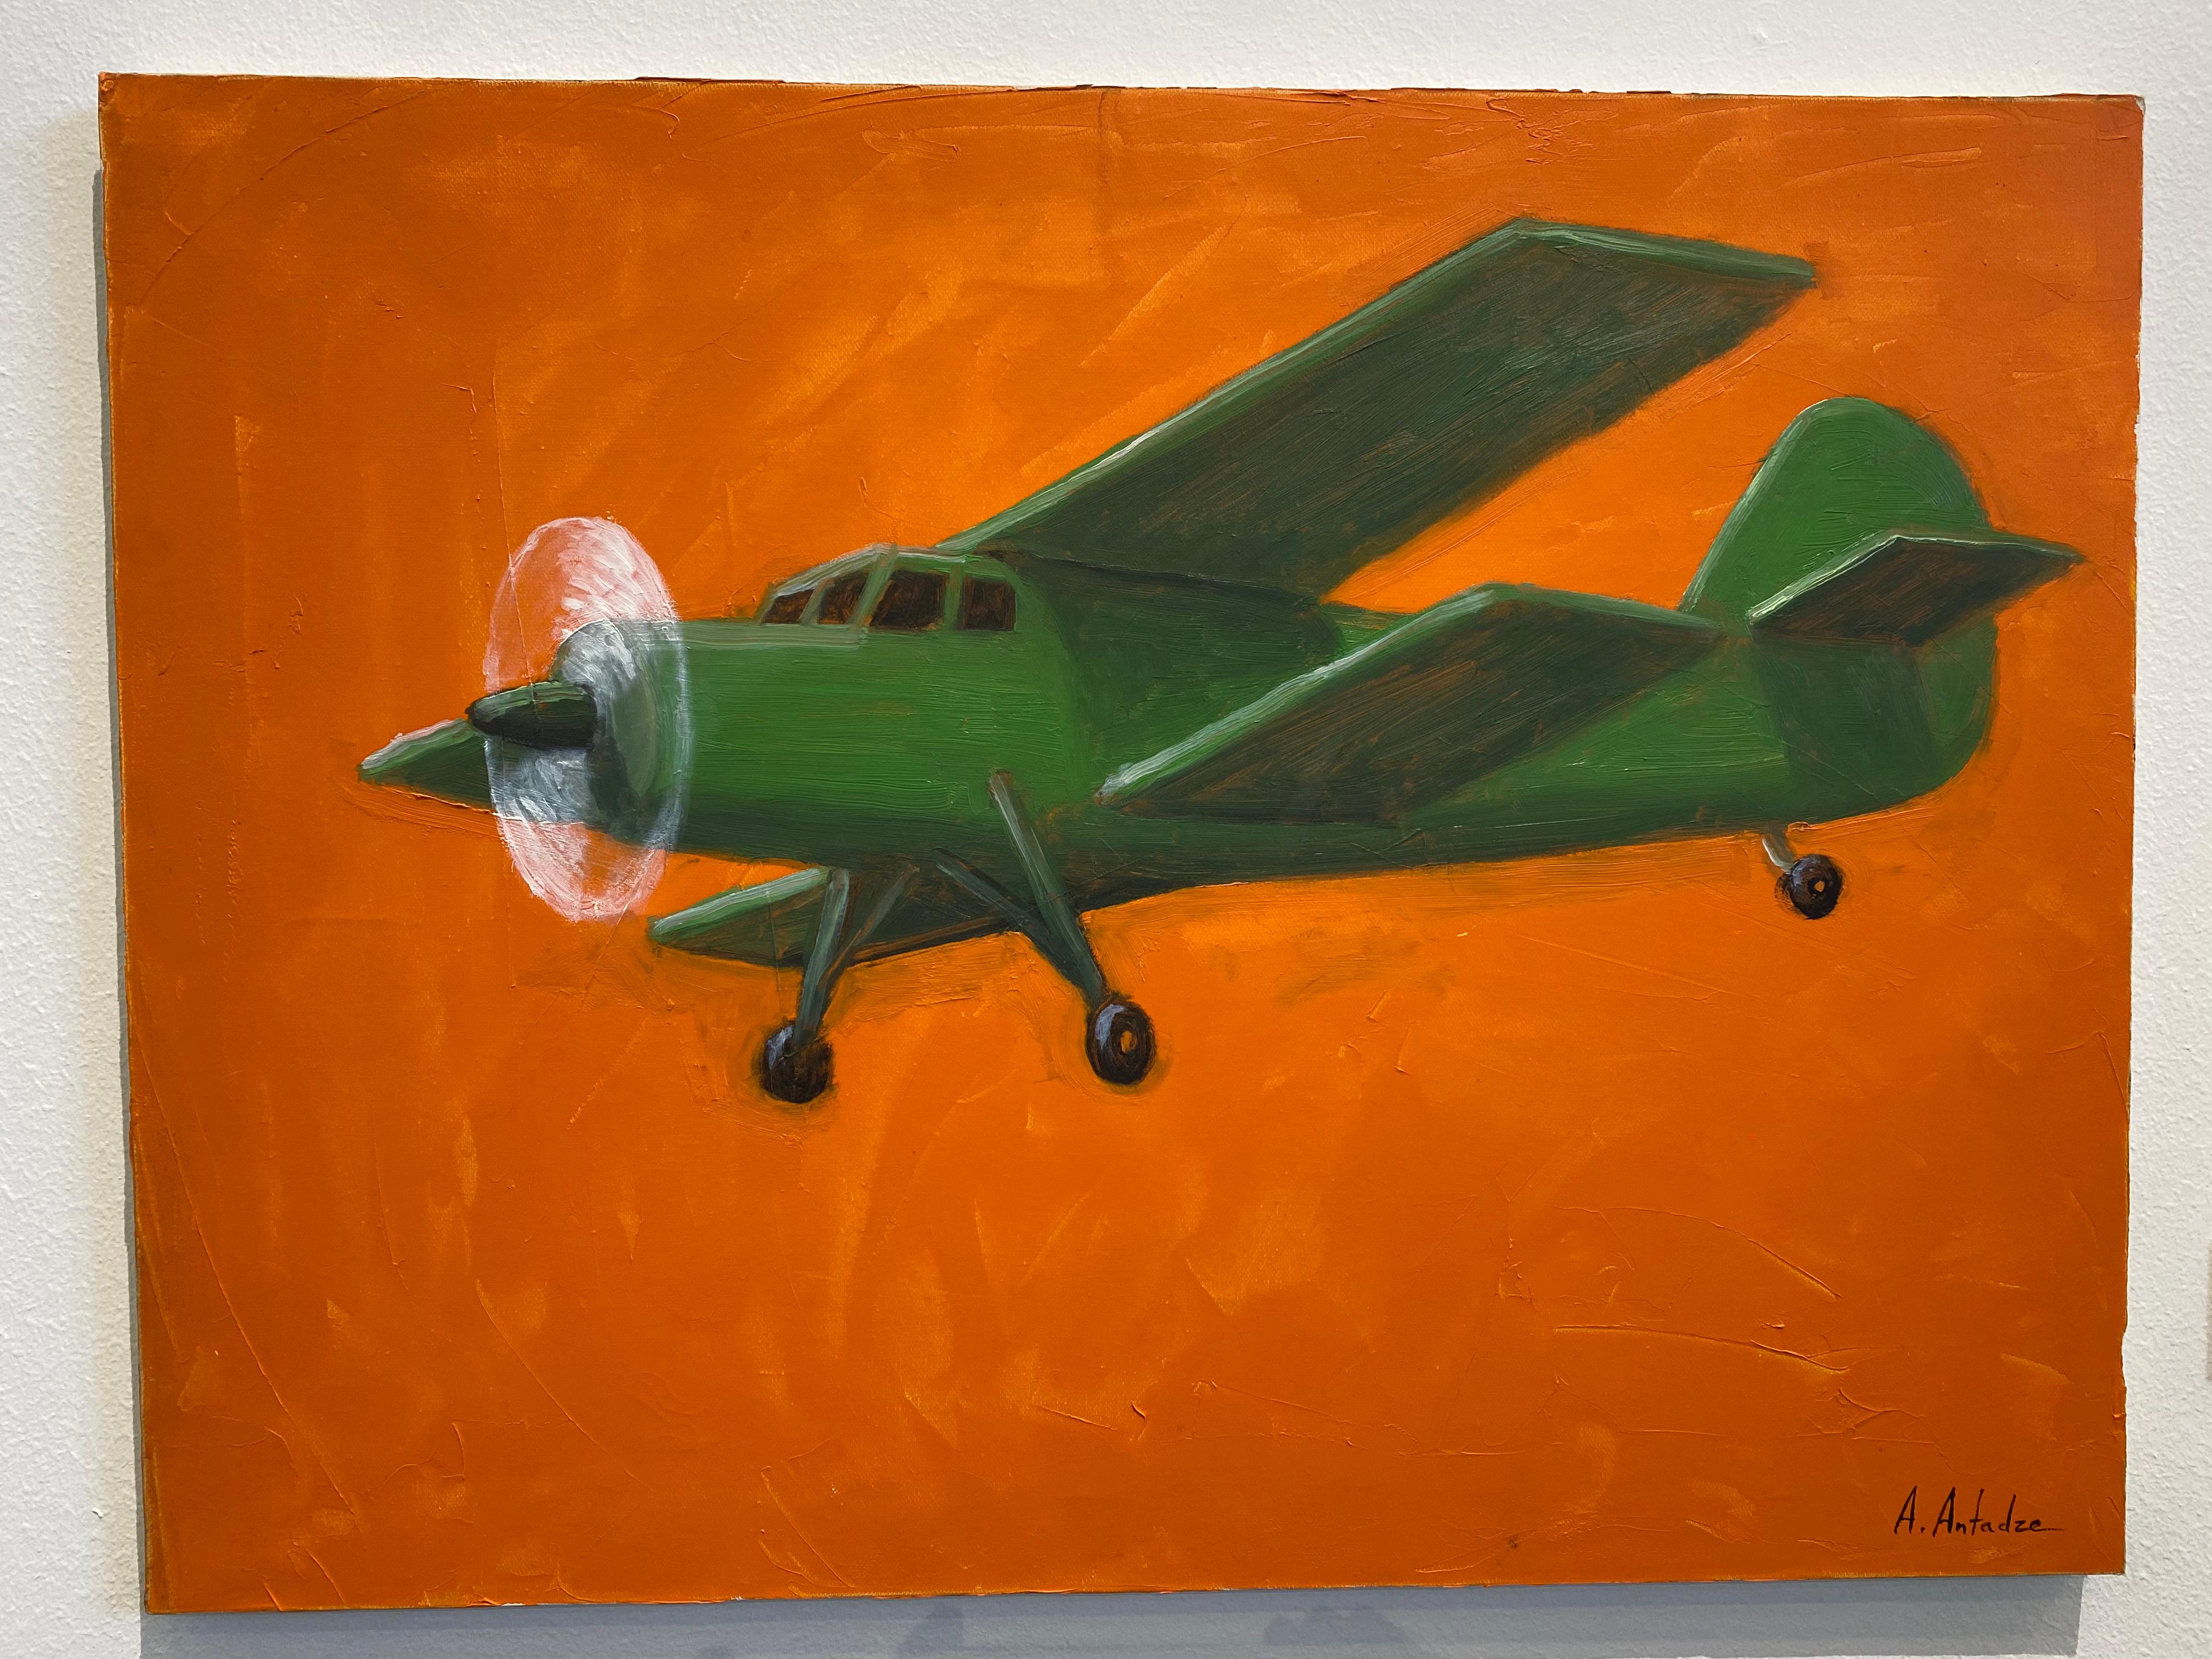 Georgian Contemporary Art by Alexander Sandro Antadze - Green Plane For Sale 6